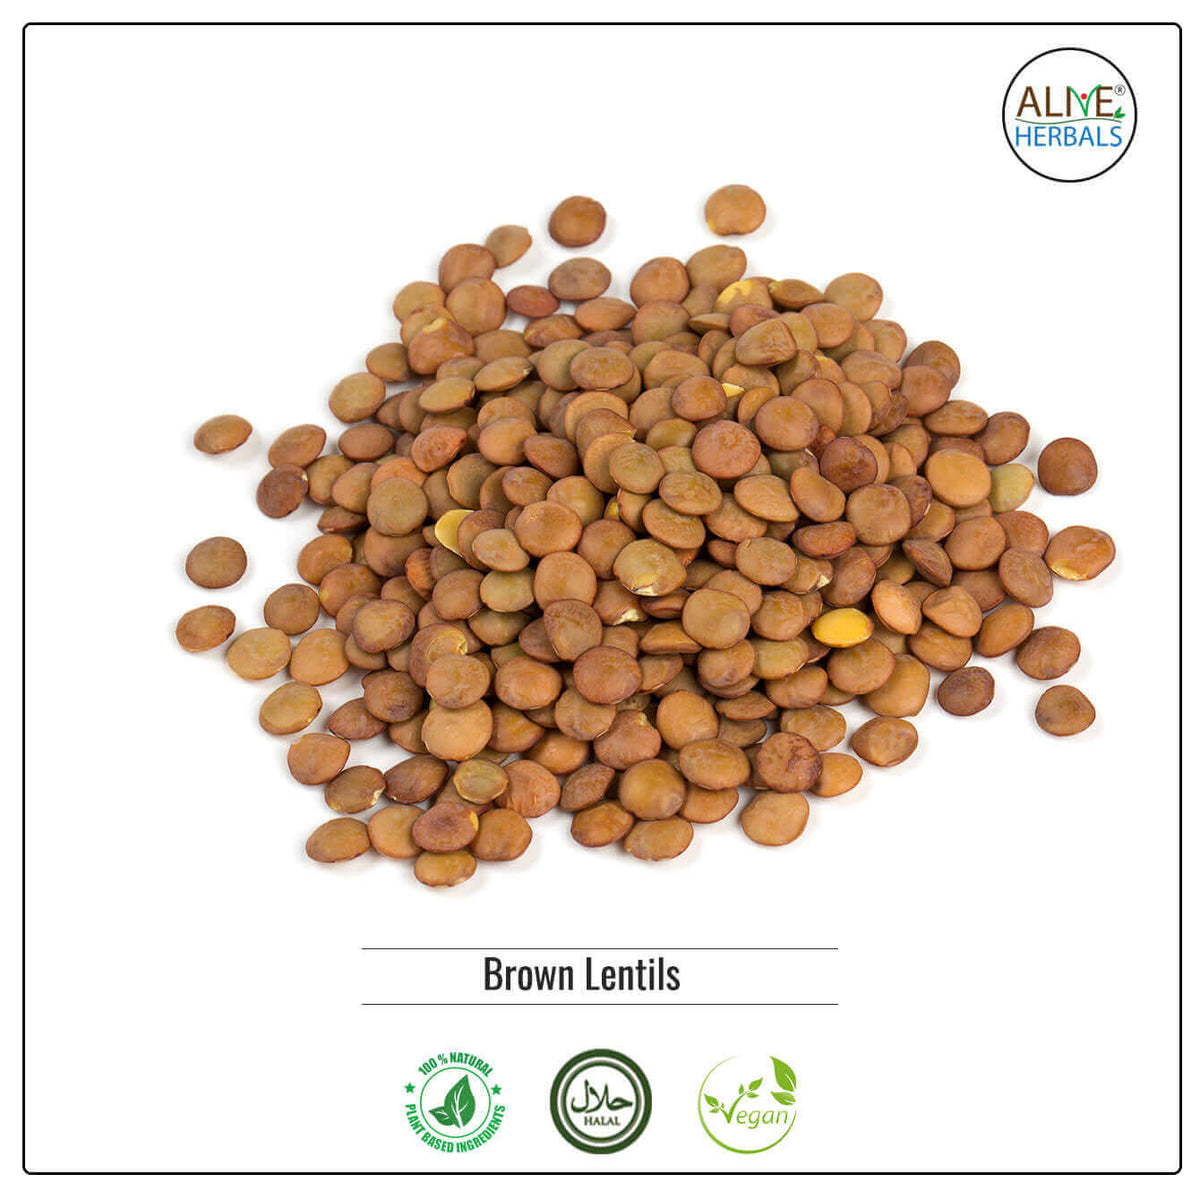 Brown Lentils - Shop at Natural Food Store | Alive Herbals.